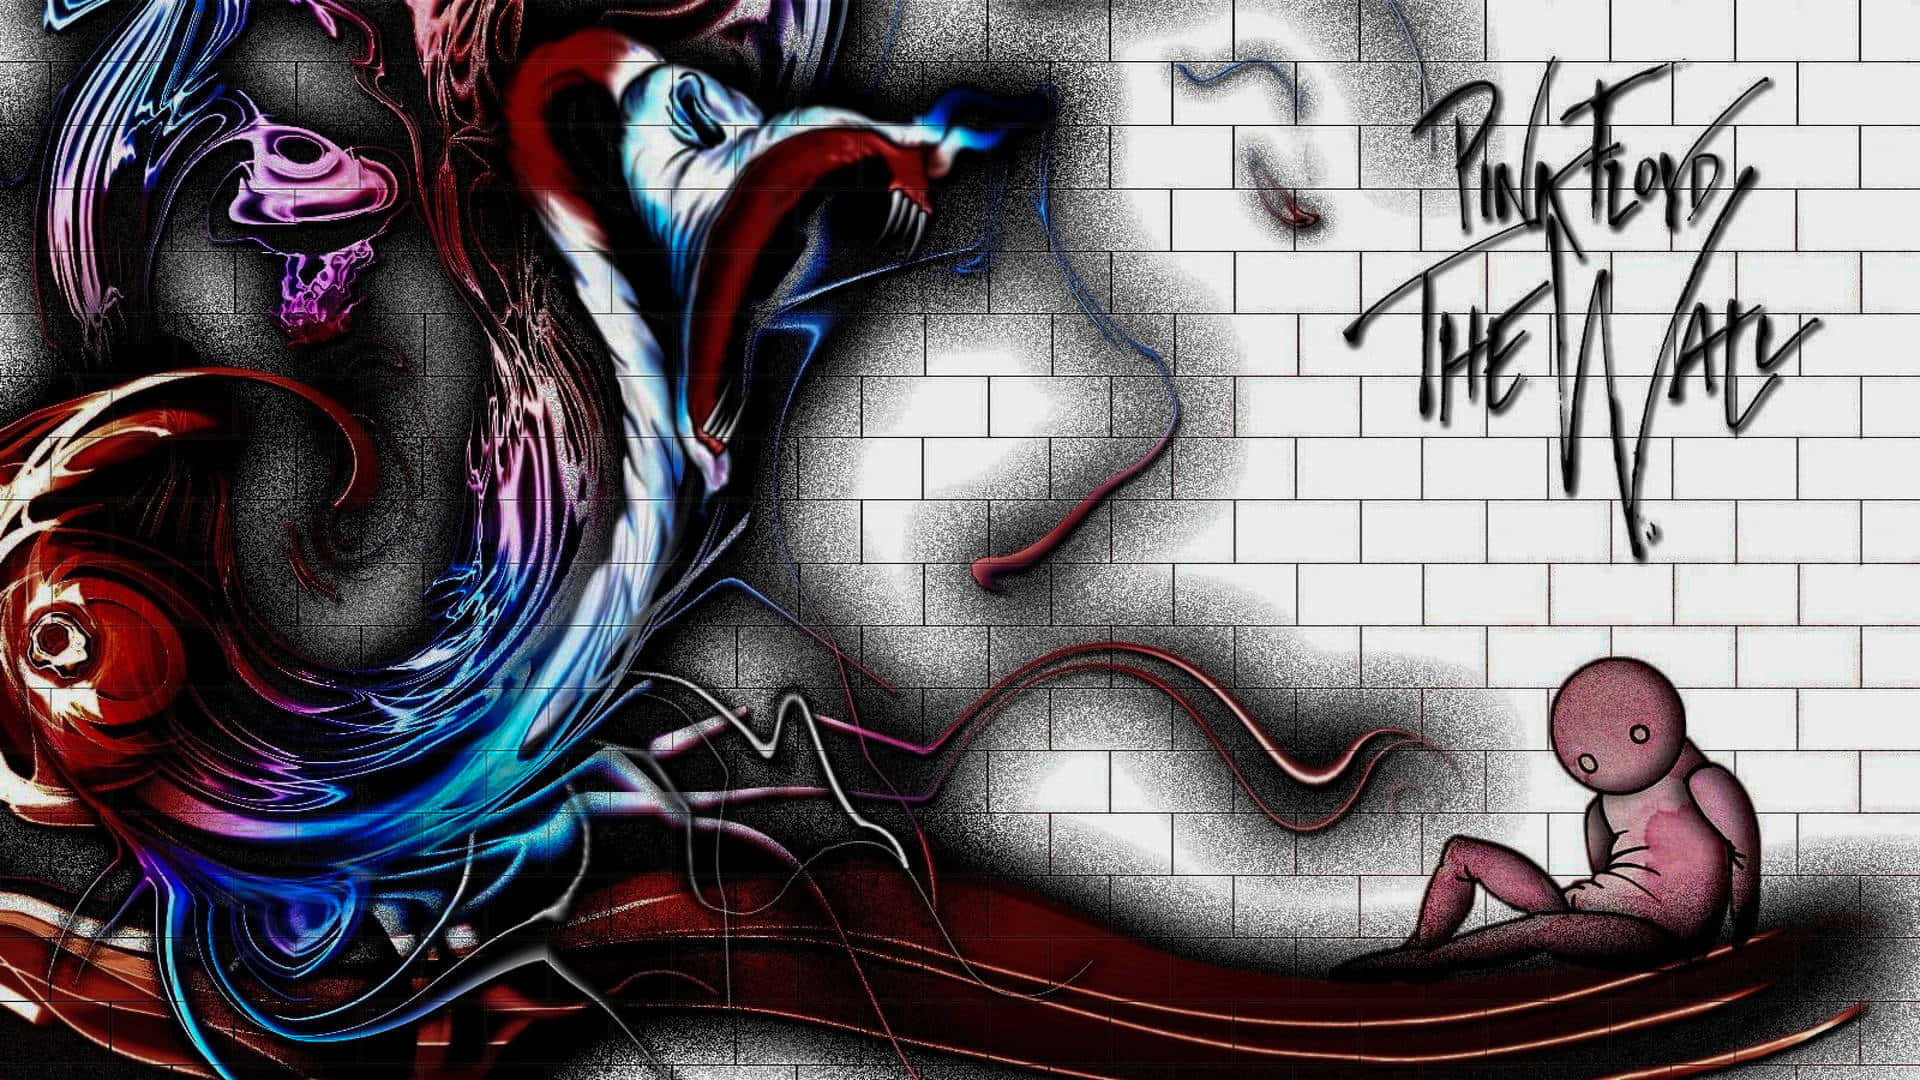 Psychedelic Pink Floyd Graffiti Wallpaper